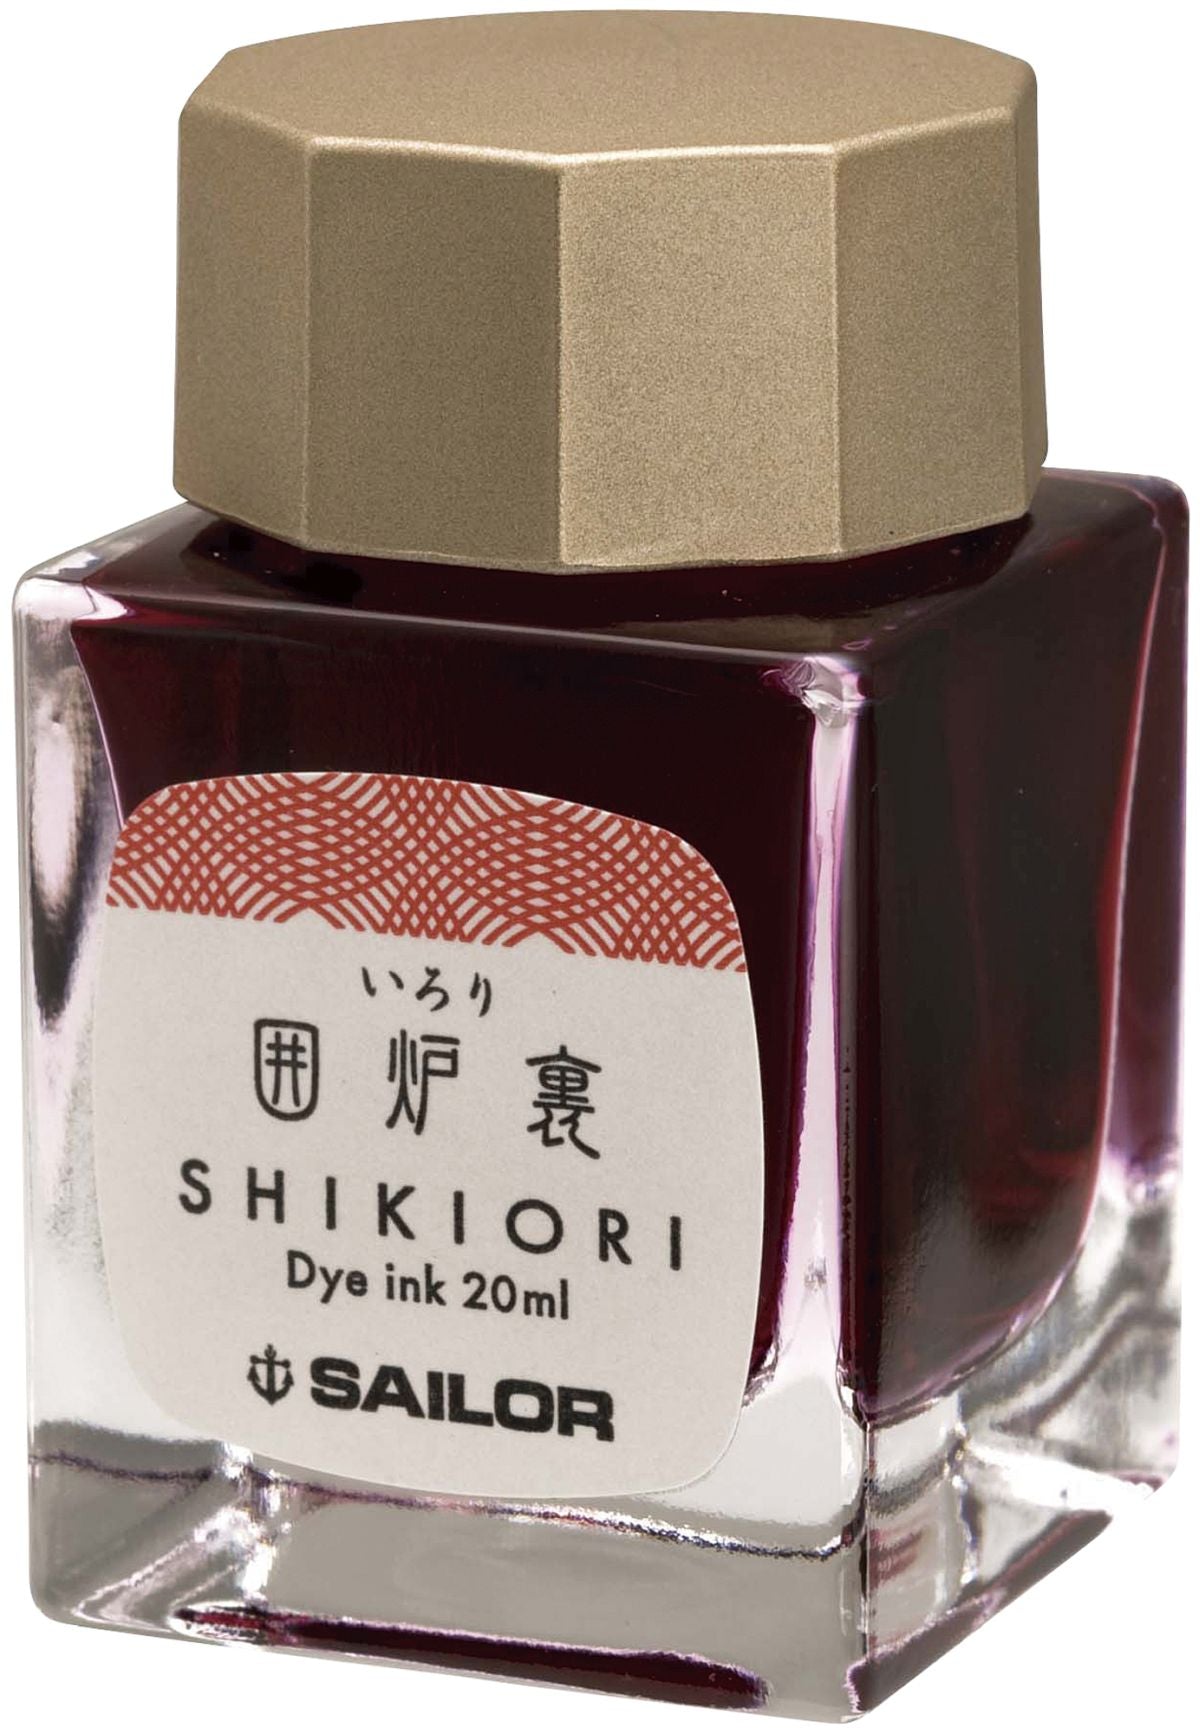 Sailor jentle ink - neue Verpackung Irori (rot)